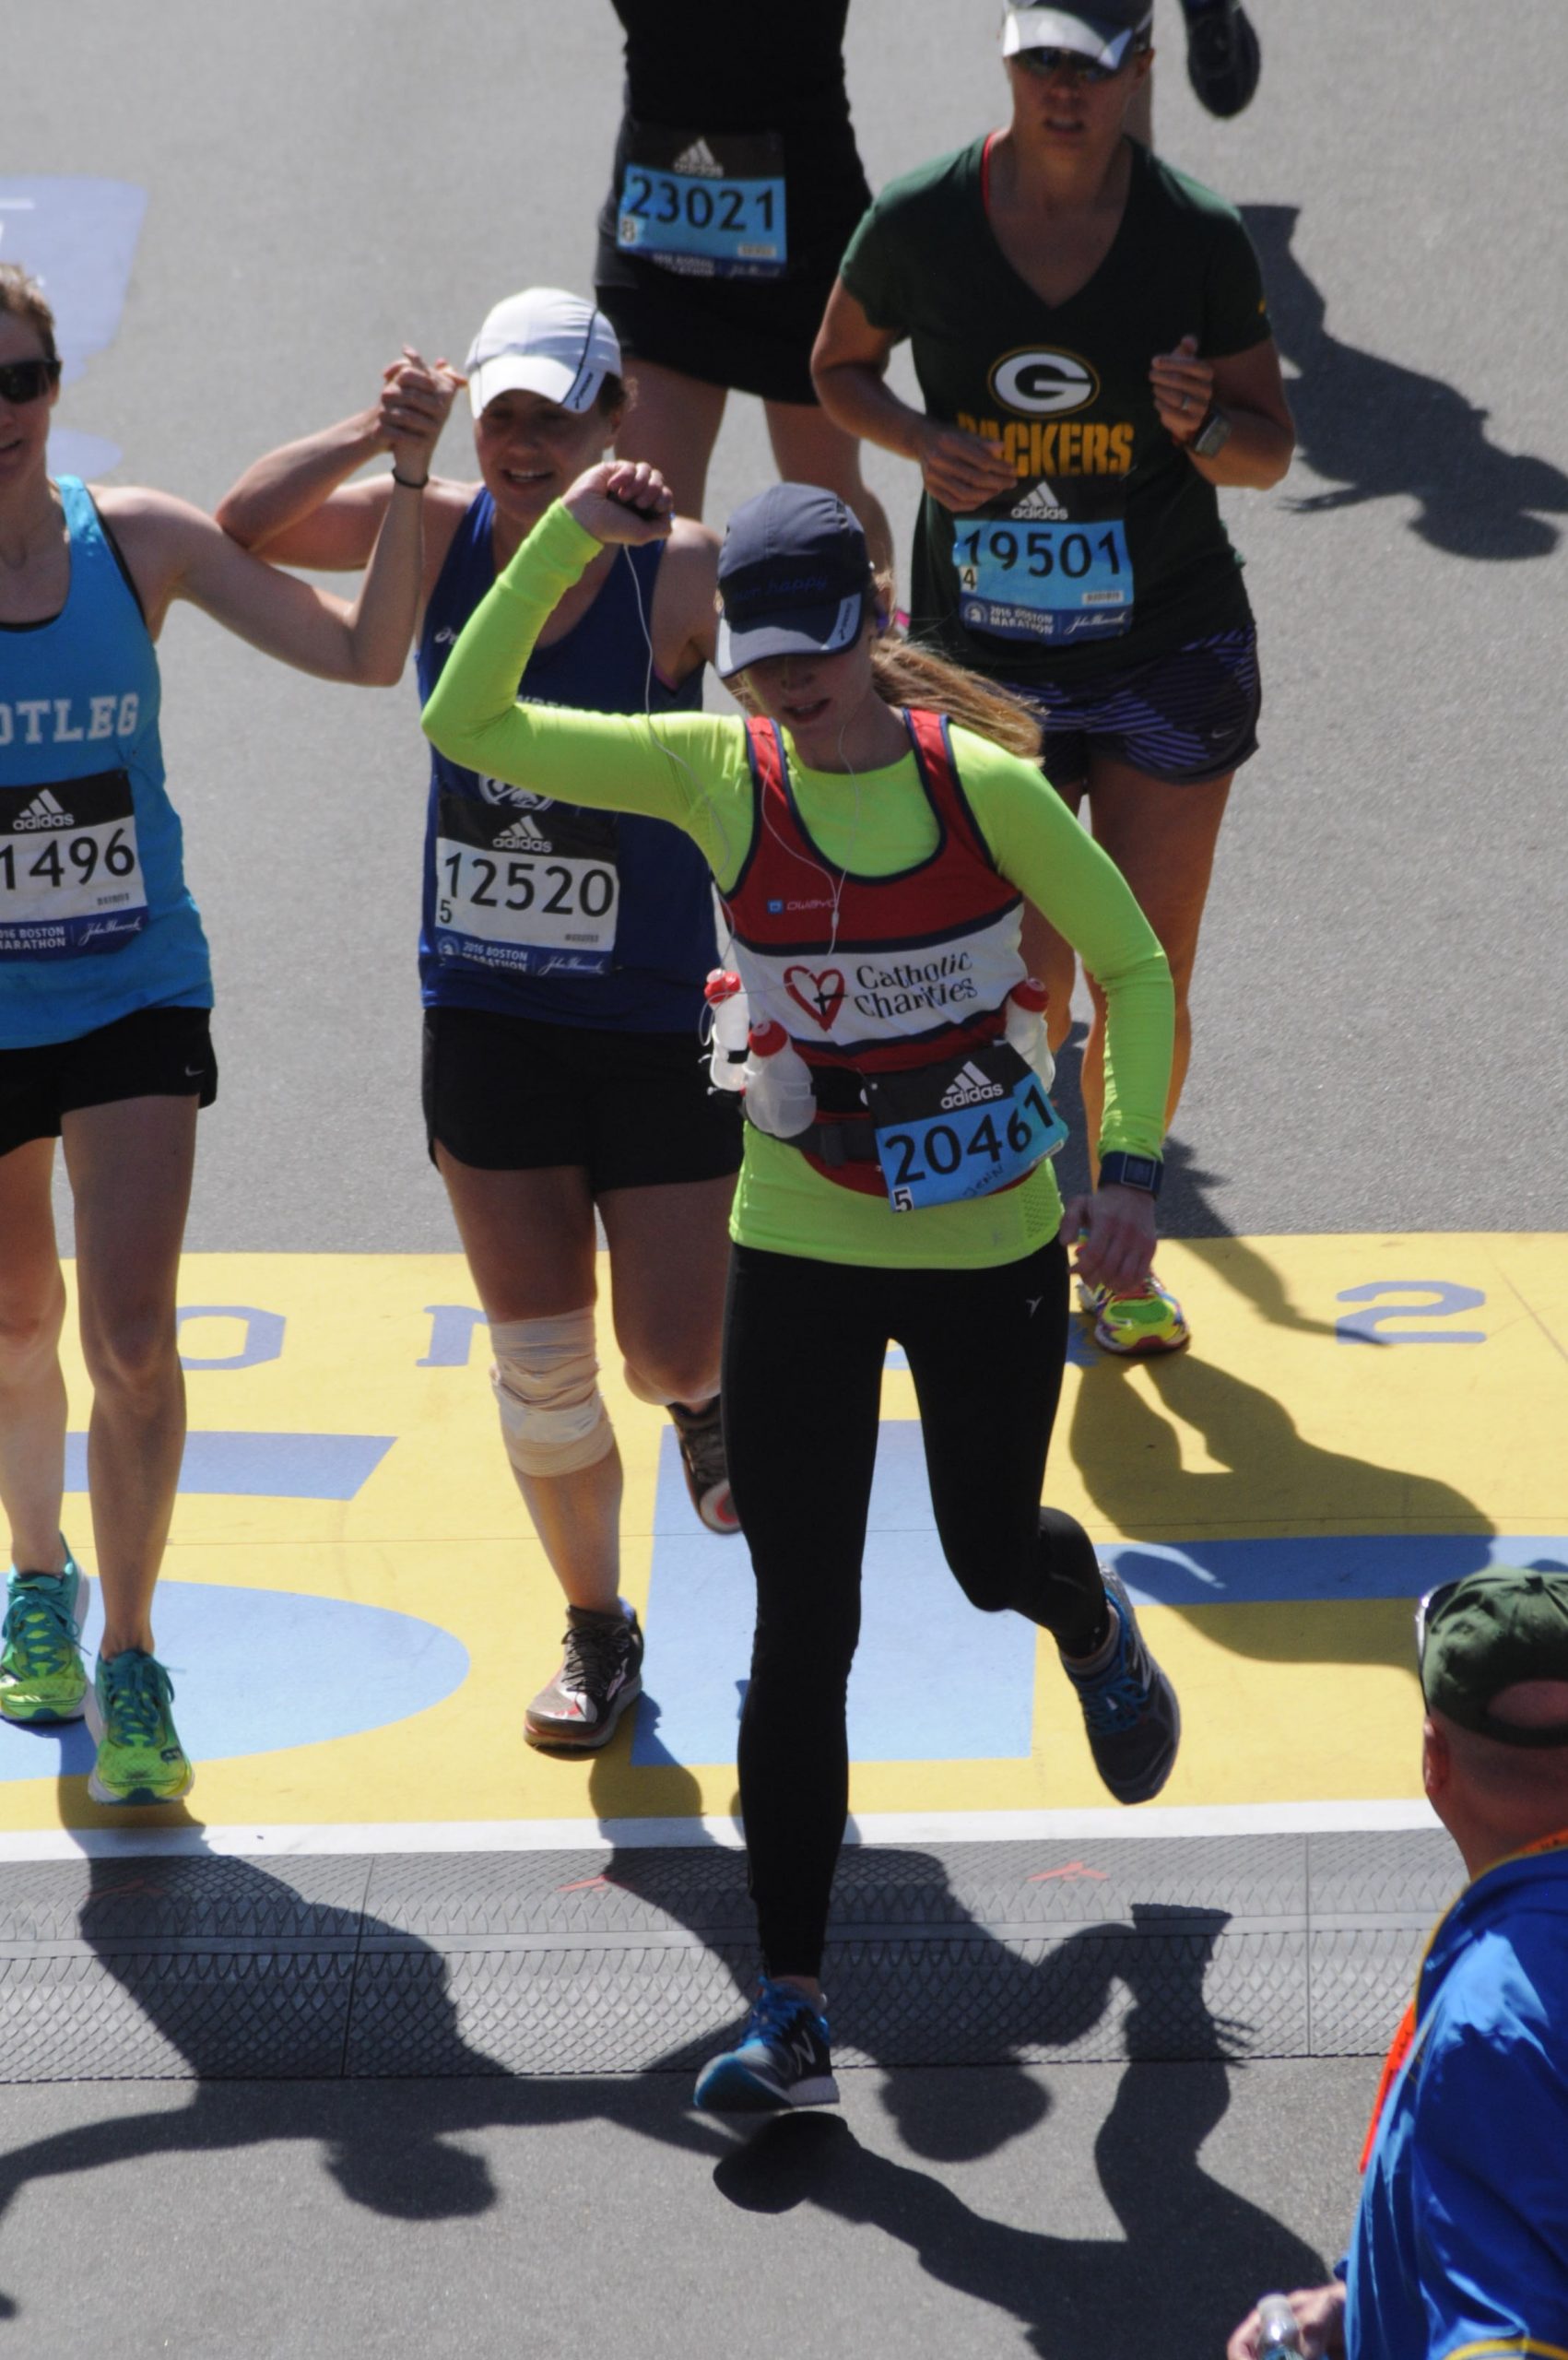 Jennifer Mathieu Henshall at the finish line of the Boston Marathon.